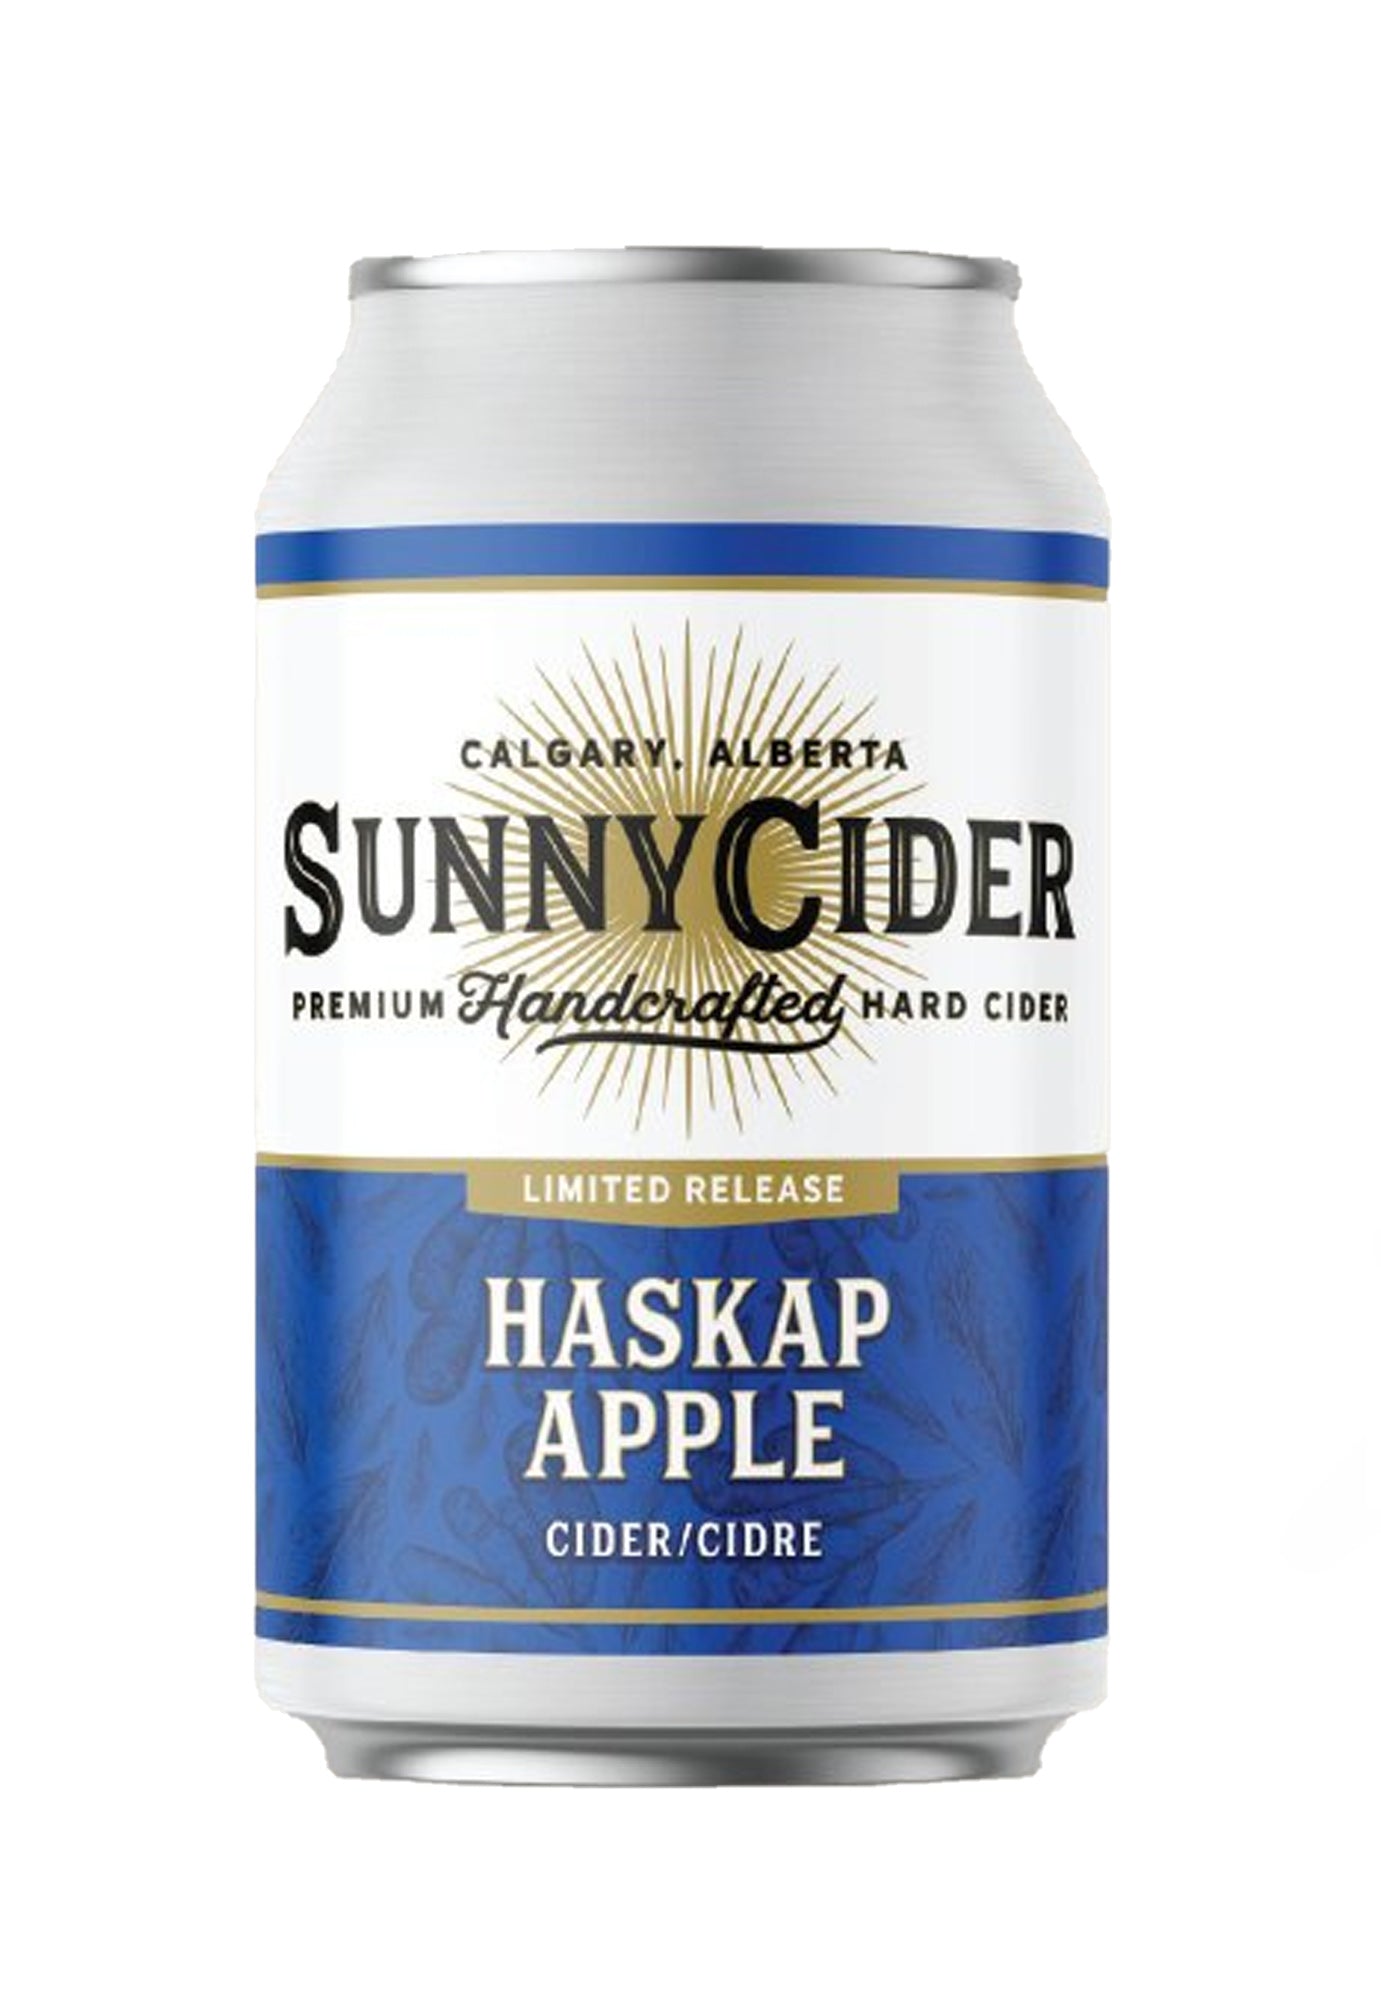 SunnyCider Haskap Apple Cider 355 ml - 4 Cans